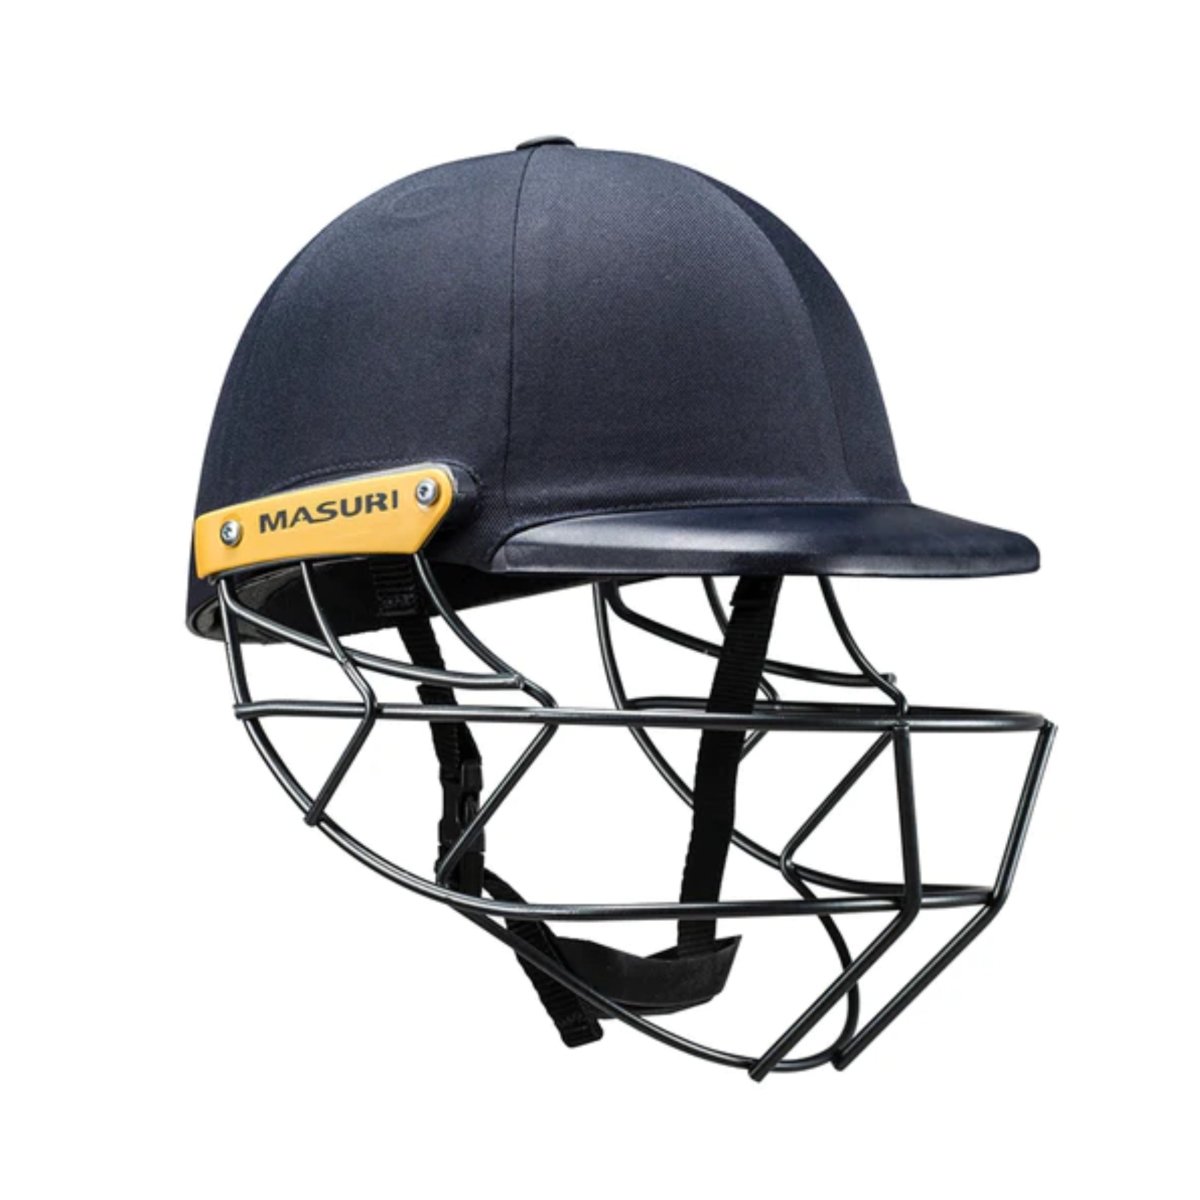 Masuri C Line Plus Steel Cricket Helmet - Acrux Sports